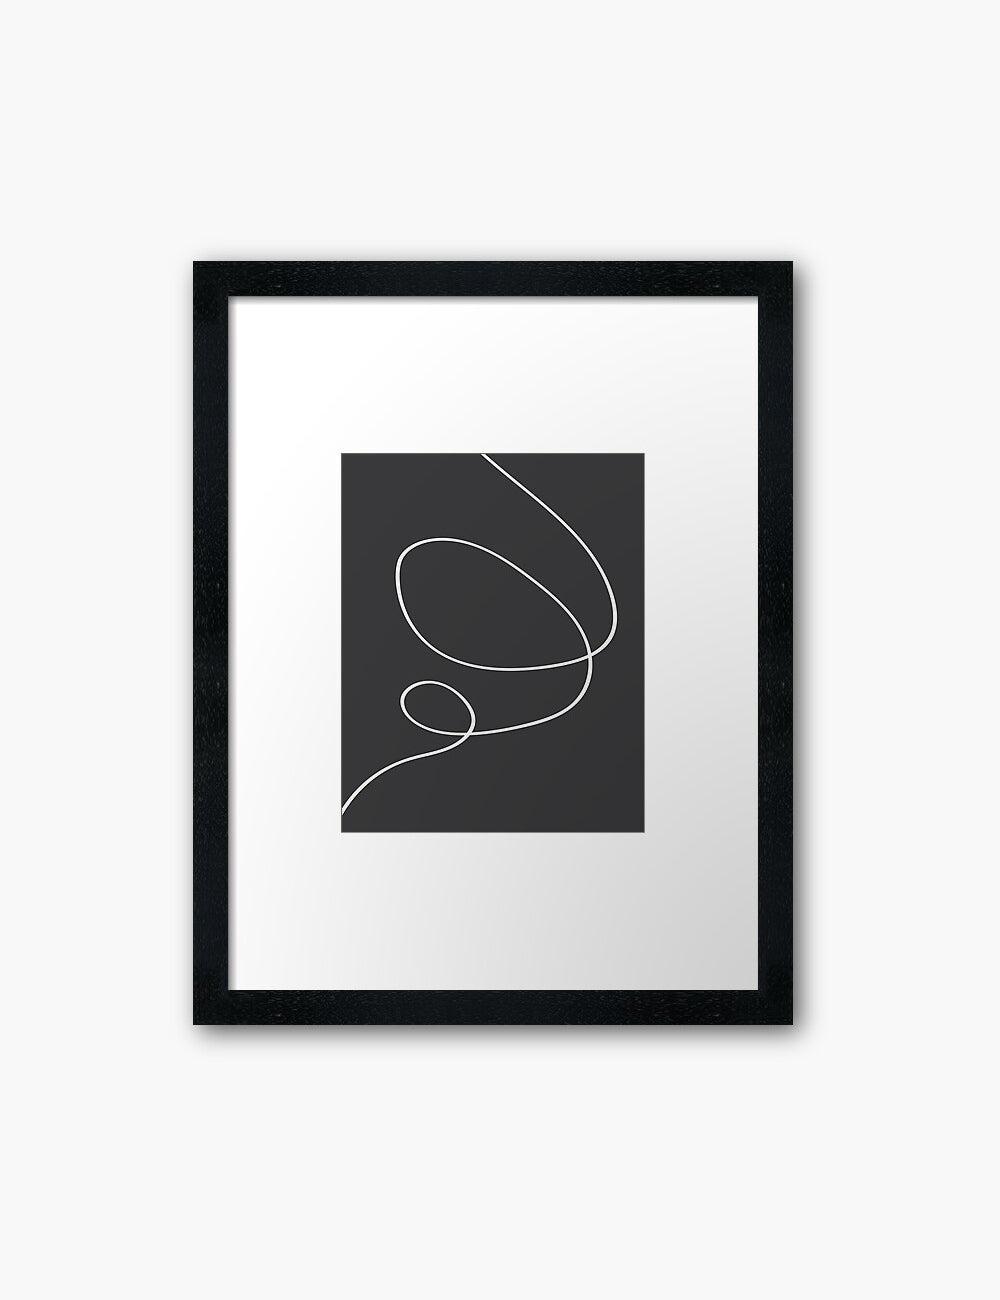 MINIMAL LINE ART. Abstract. Boho. Black and White. Printable Wall Art Illustration. - PAPER MOON Art & Design